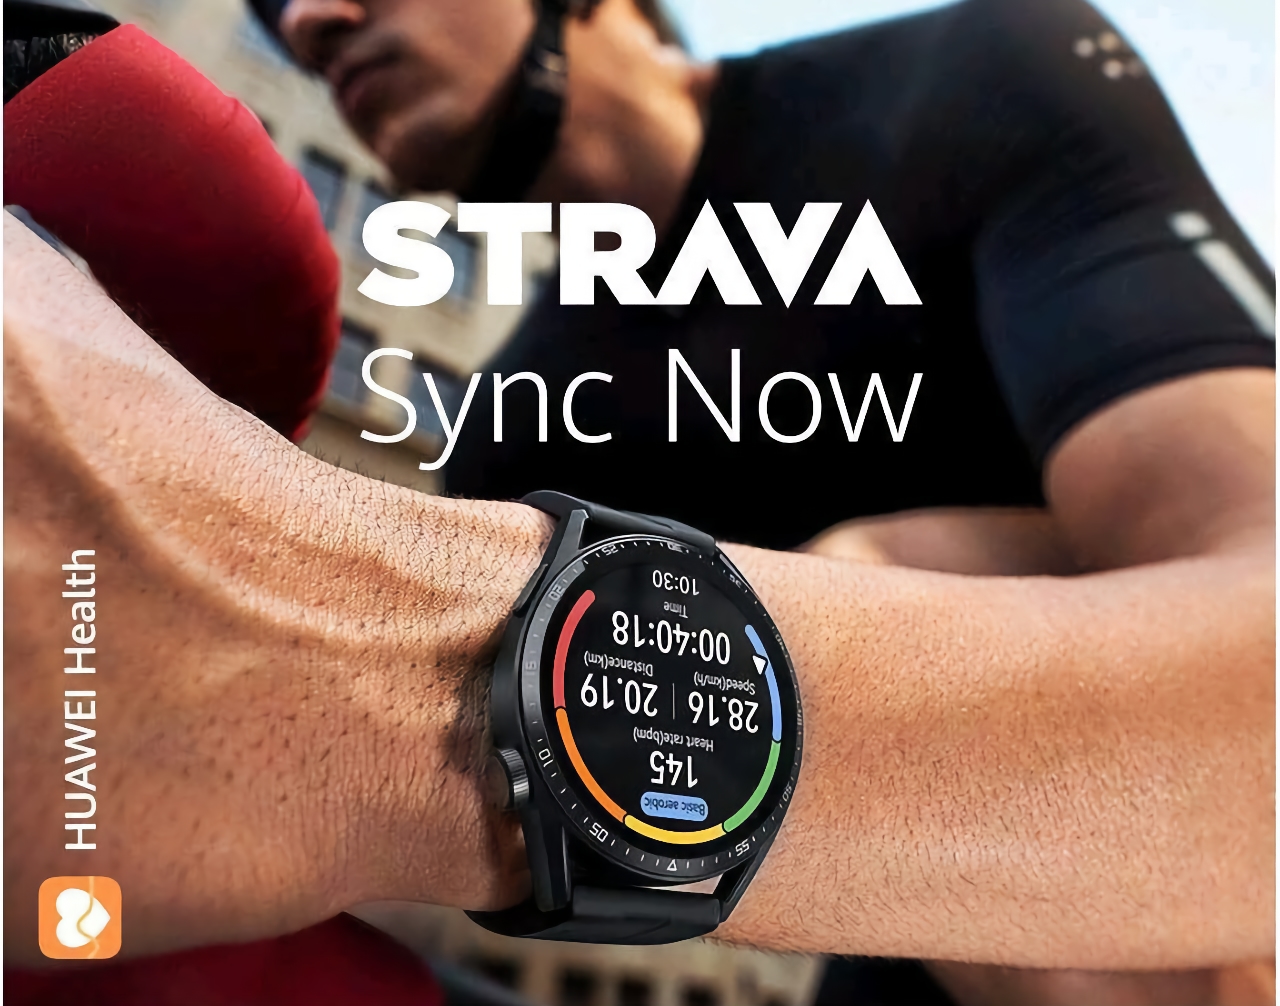 Huawei smartwatches support Strava service